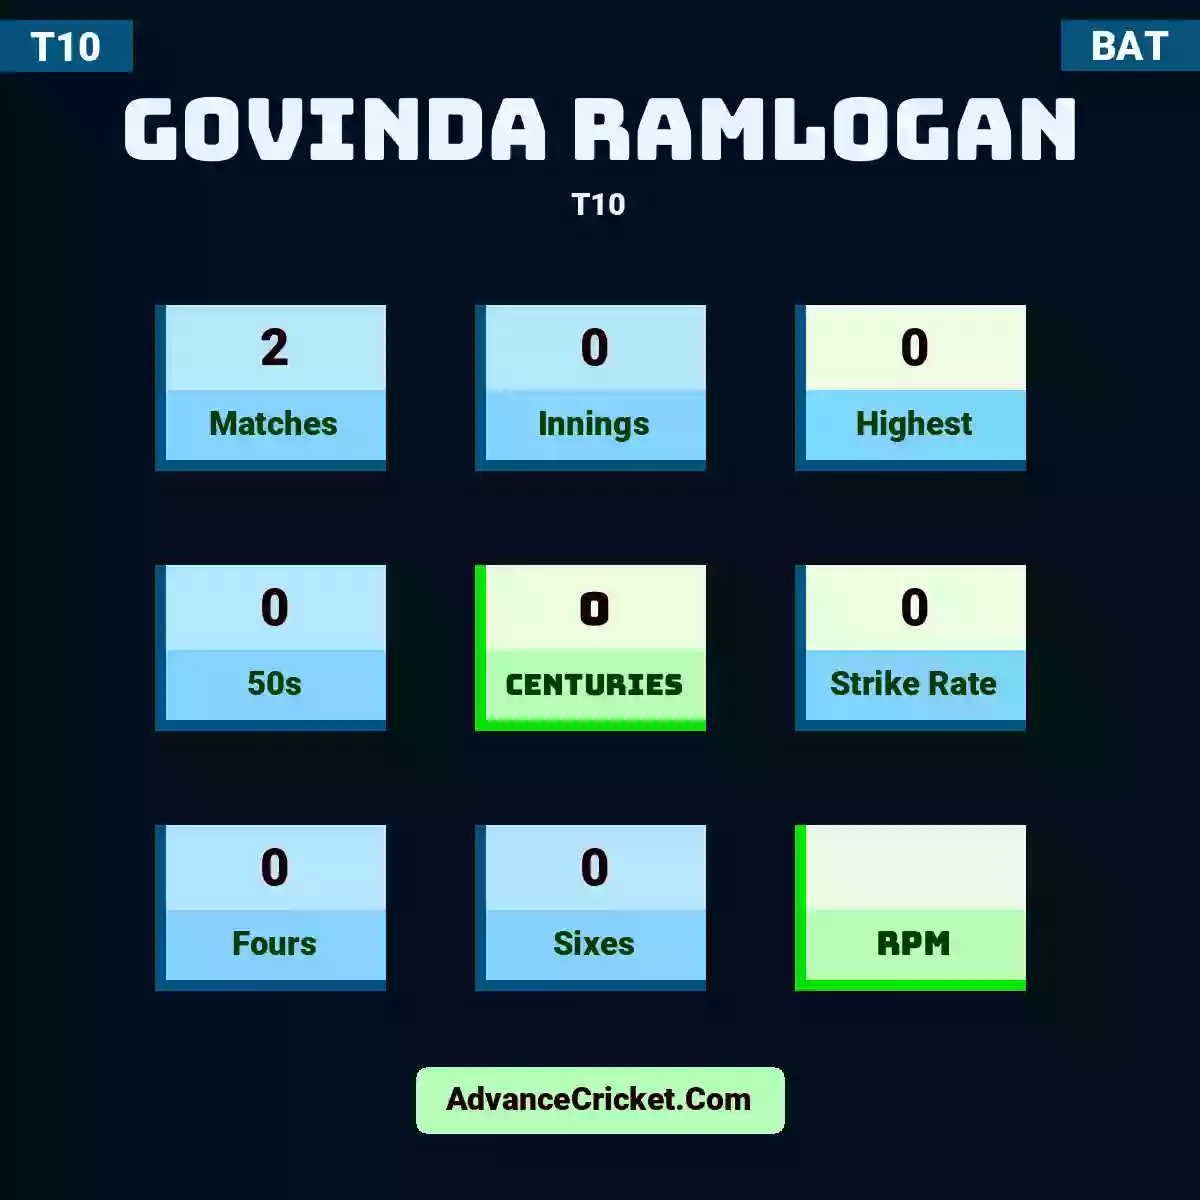 Govinda Ramlogan T10 , Govinda Ramlogan played 2 matches, scored 0 runs as highest, 0 half-centuries, and 0 centuries, with a strike rate of 0. G.Ramlogan hit 0 fours and 0 sixes.